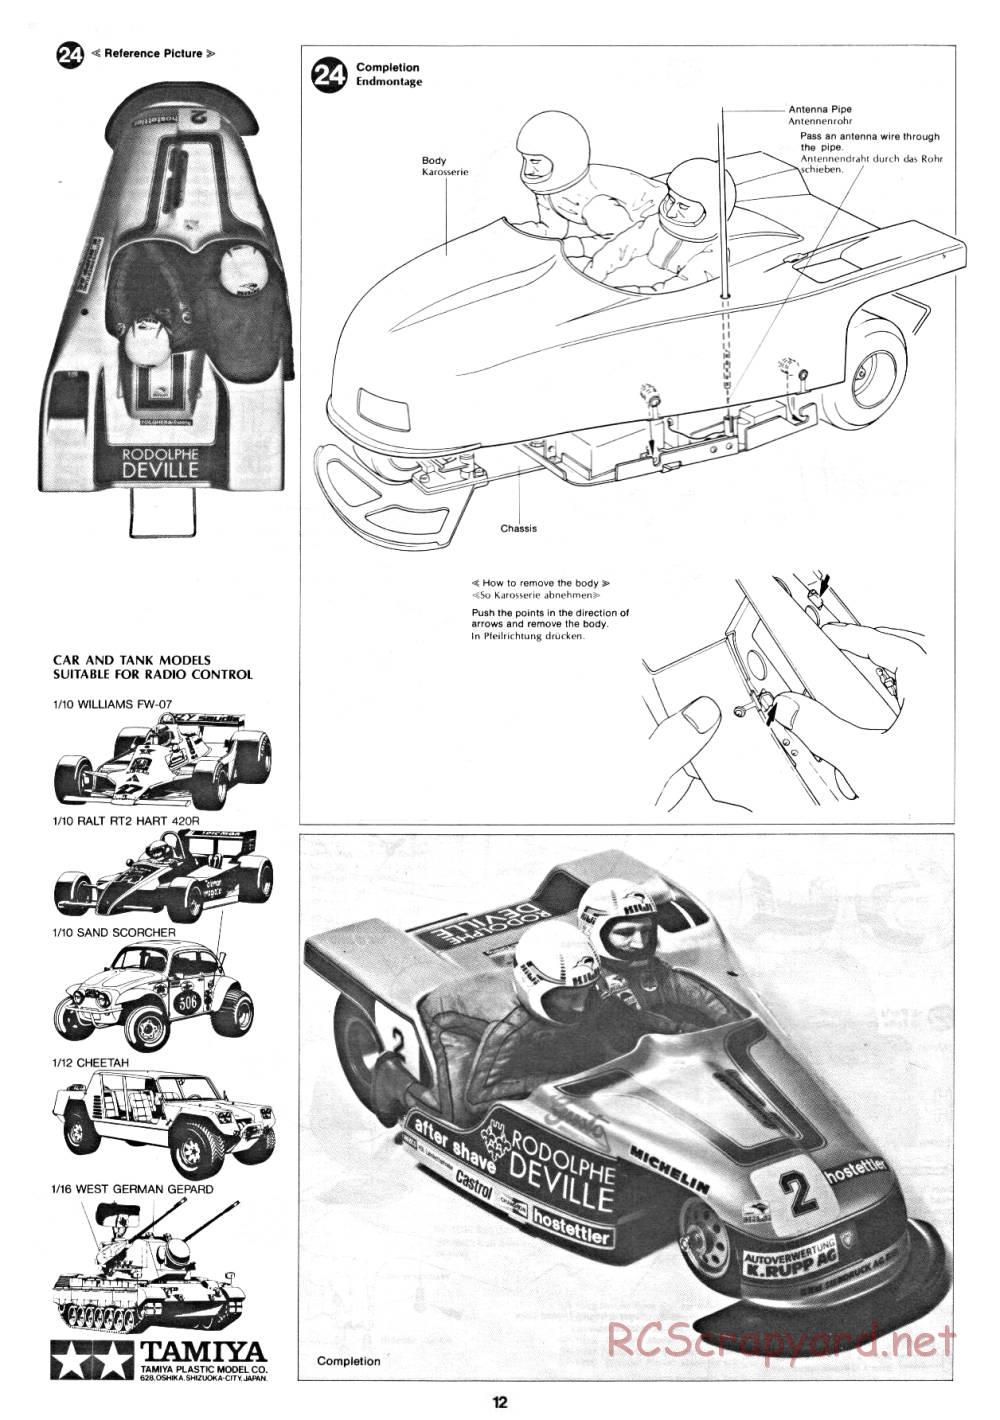 Tamiya - B2B Racing Sidecar - 58017 - Manual - Page 12